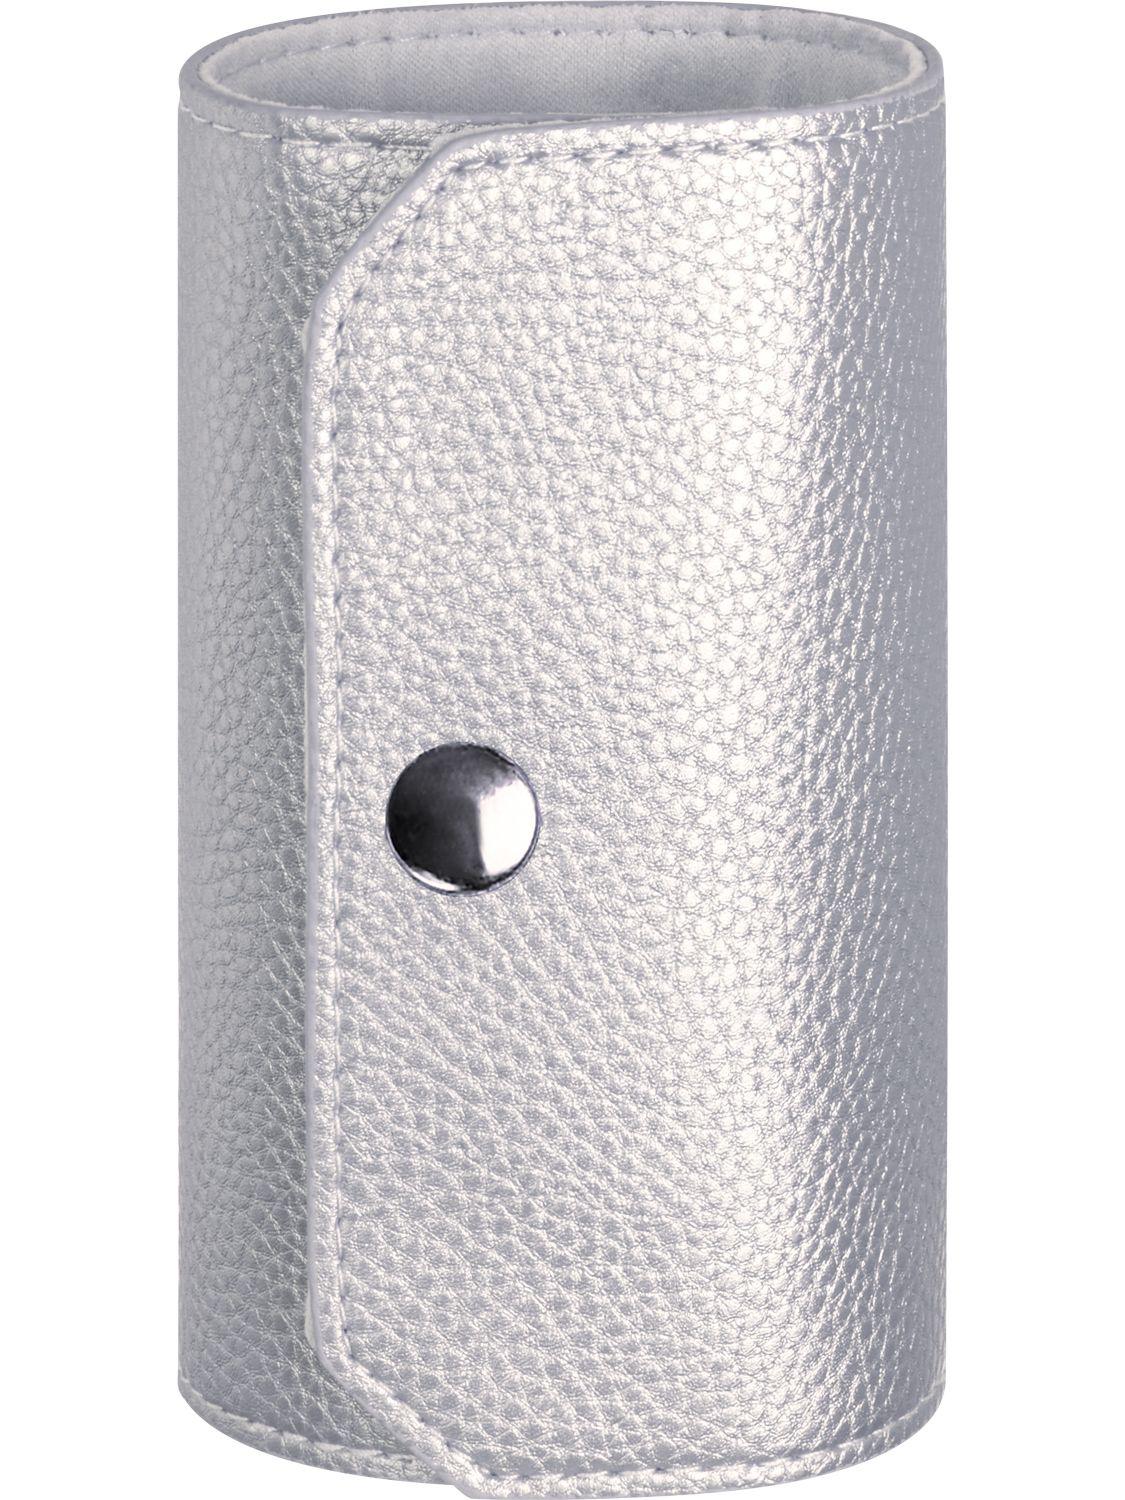 Olgilvies Luxury Jewellery Case Silver - Ginja B